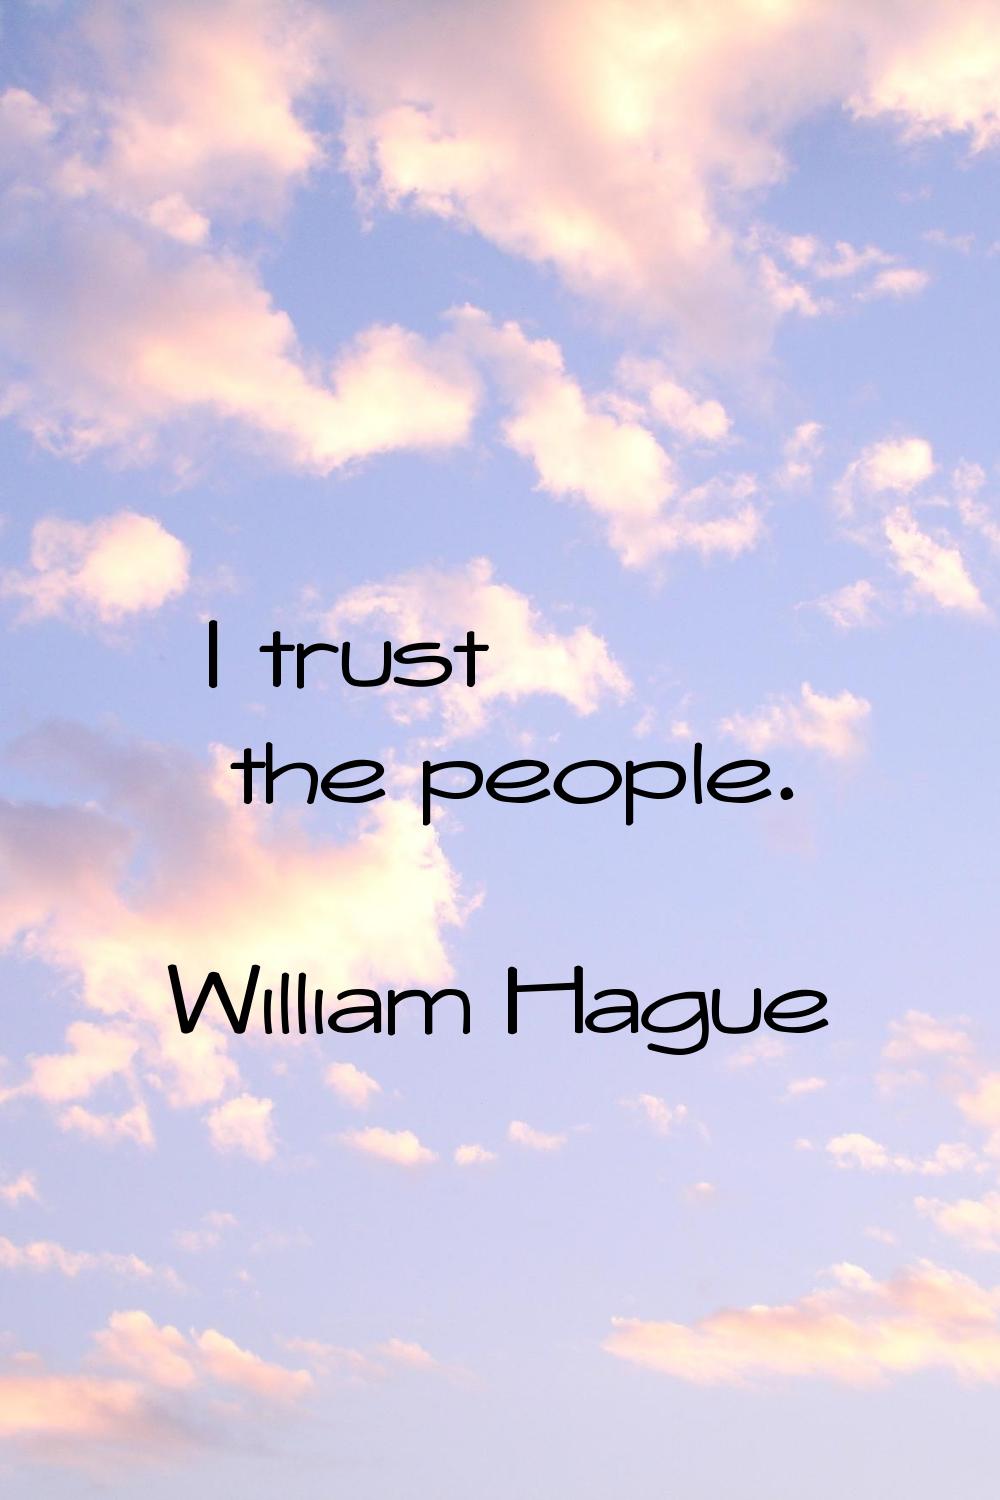 I trust the people.